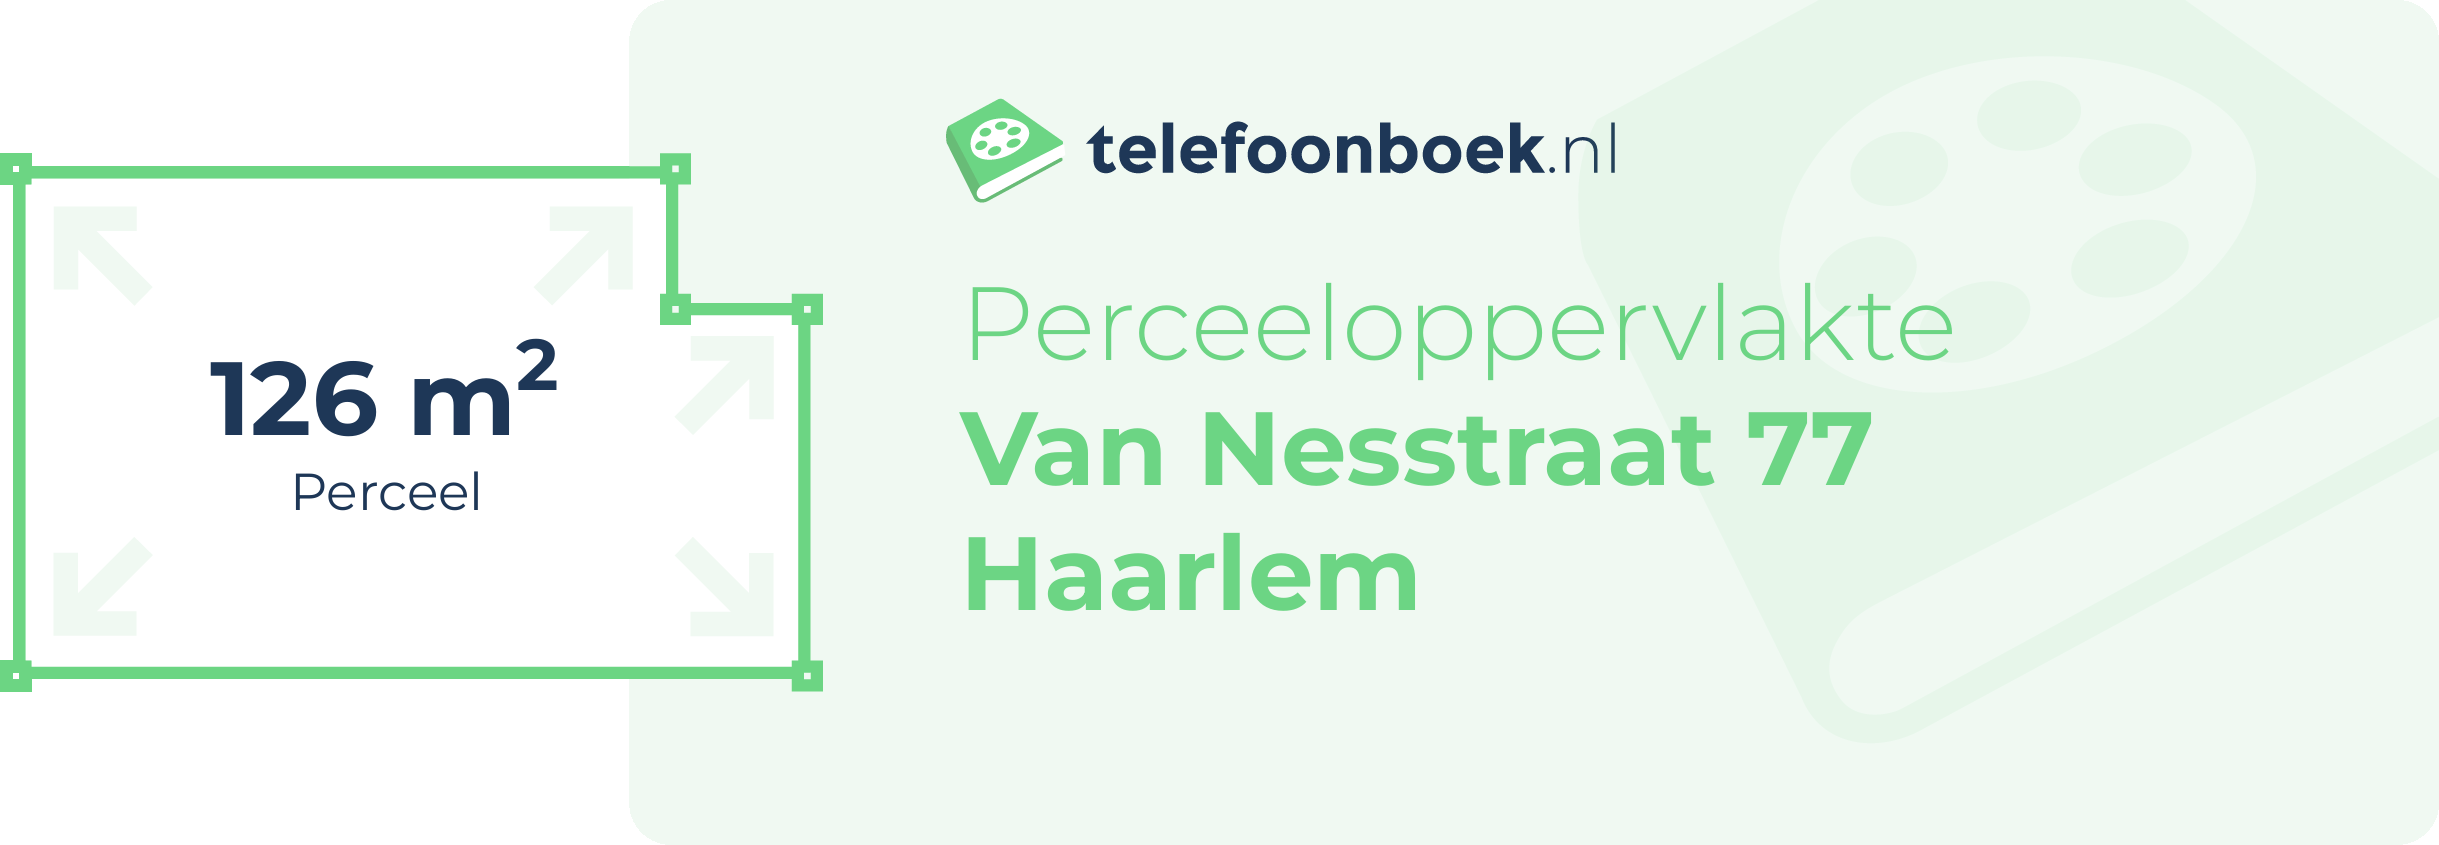 Perceeloppervlakte Van Nesstraat 77 Haarlem